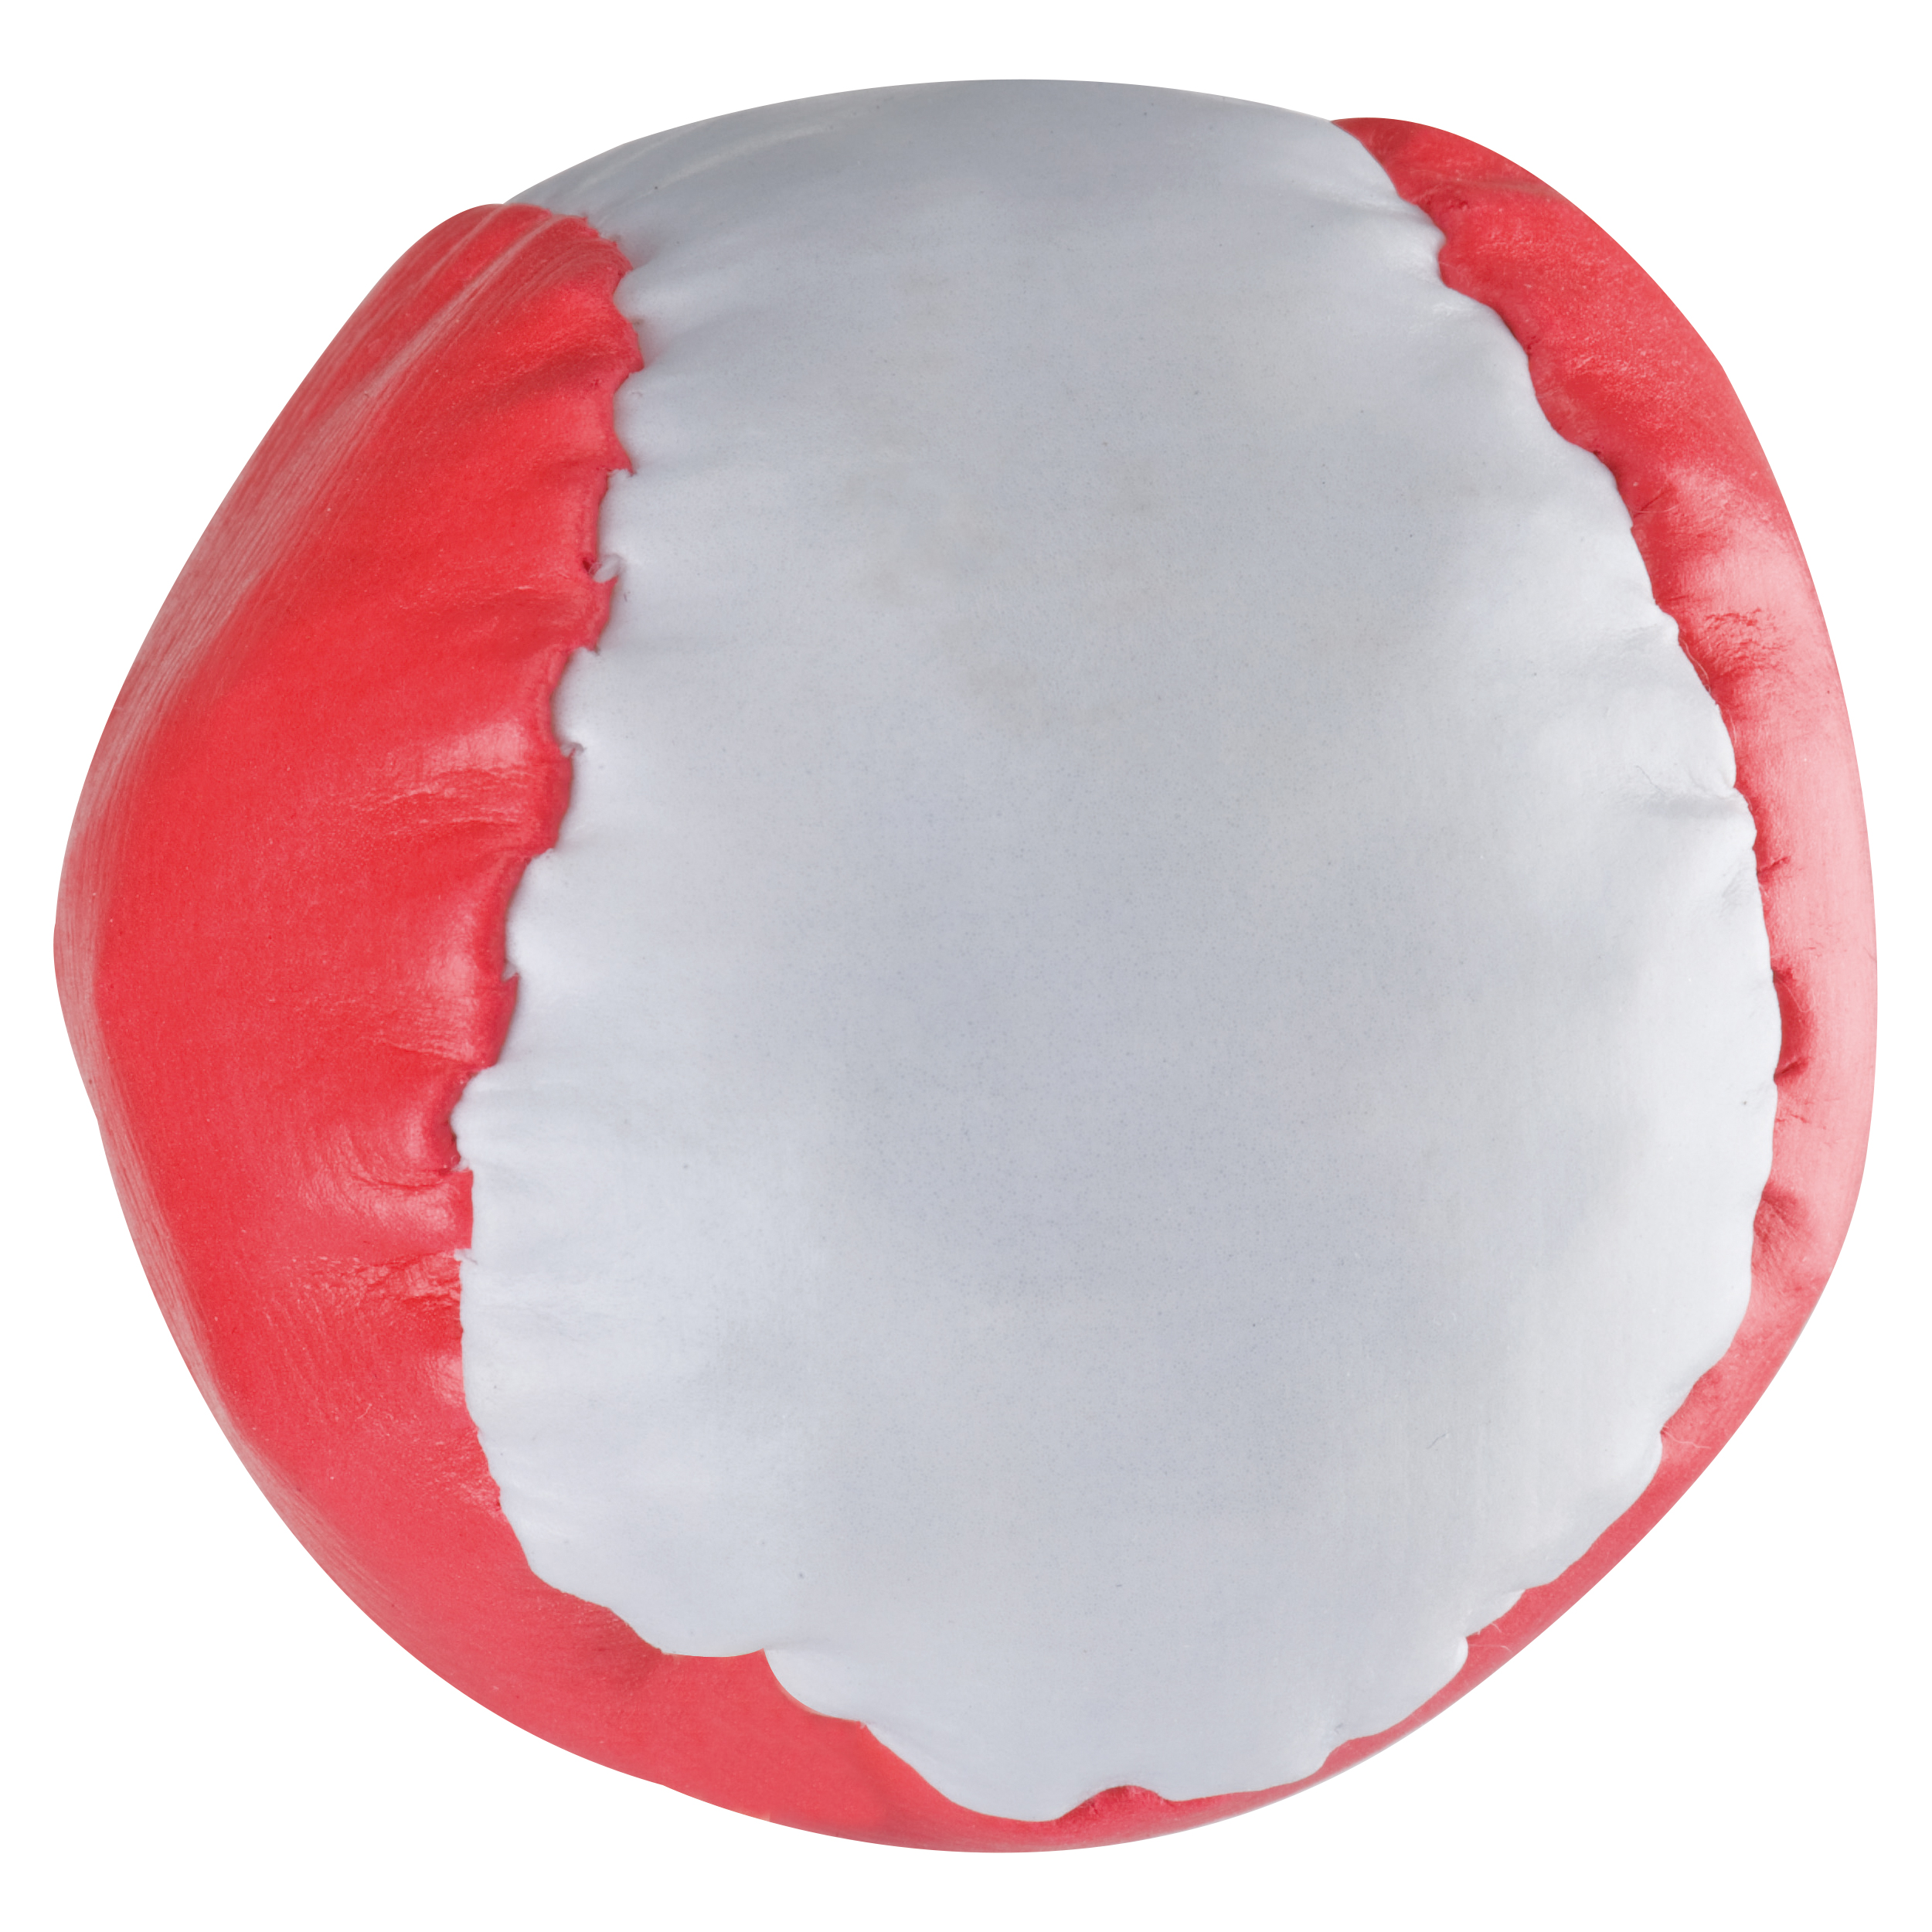 Anti Stress Ball mit Kunststoffgranulatfüllung